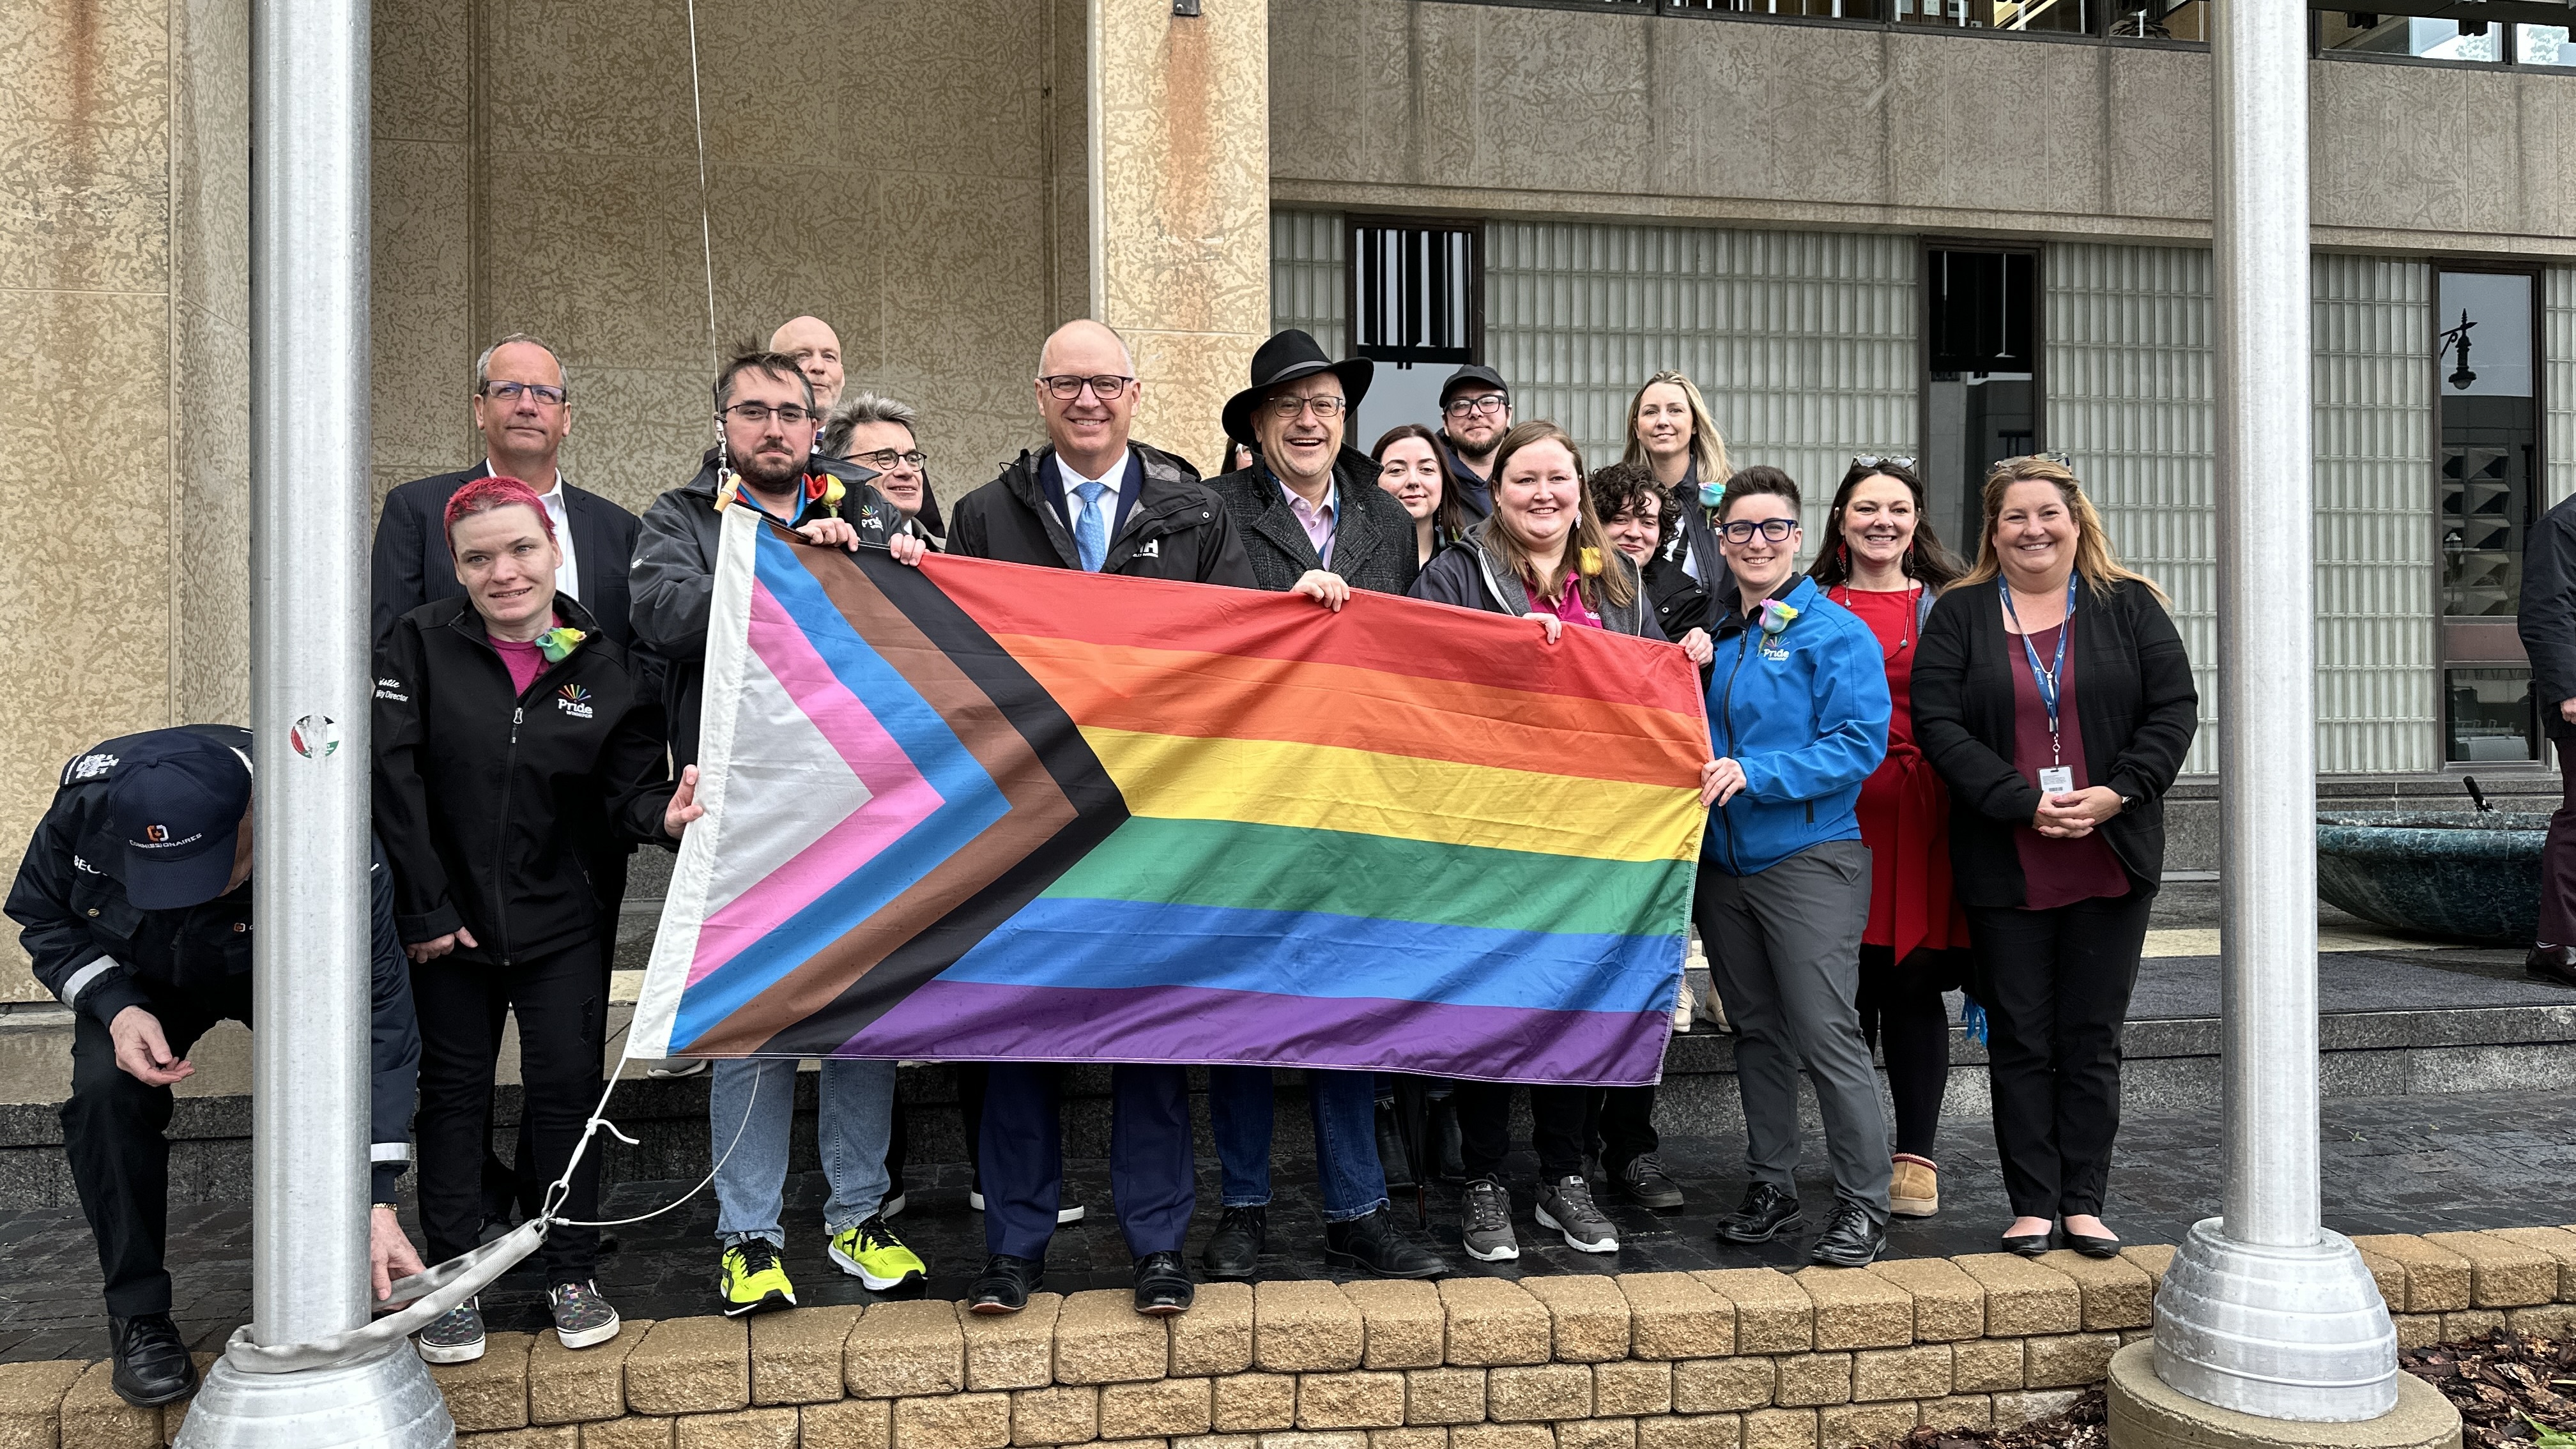 Pride kicks off in Winnipeg with flag raising